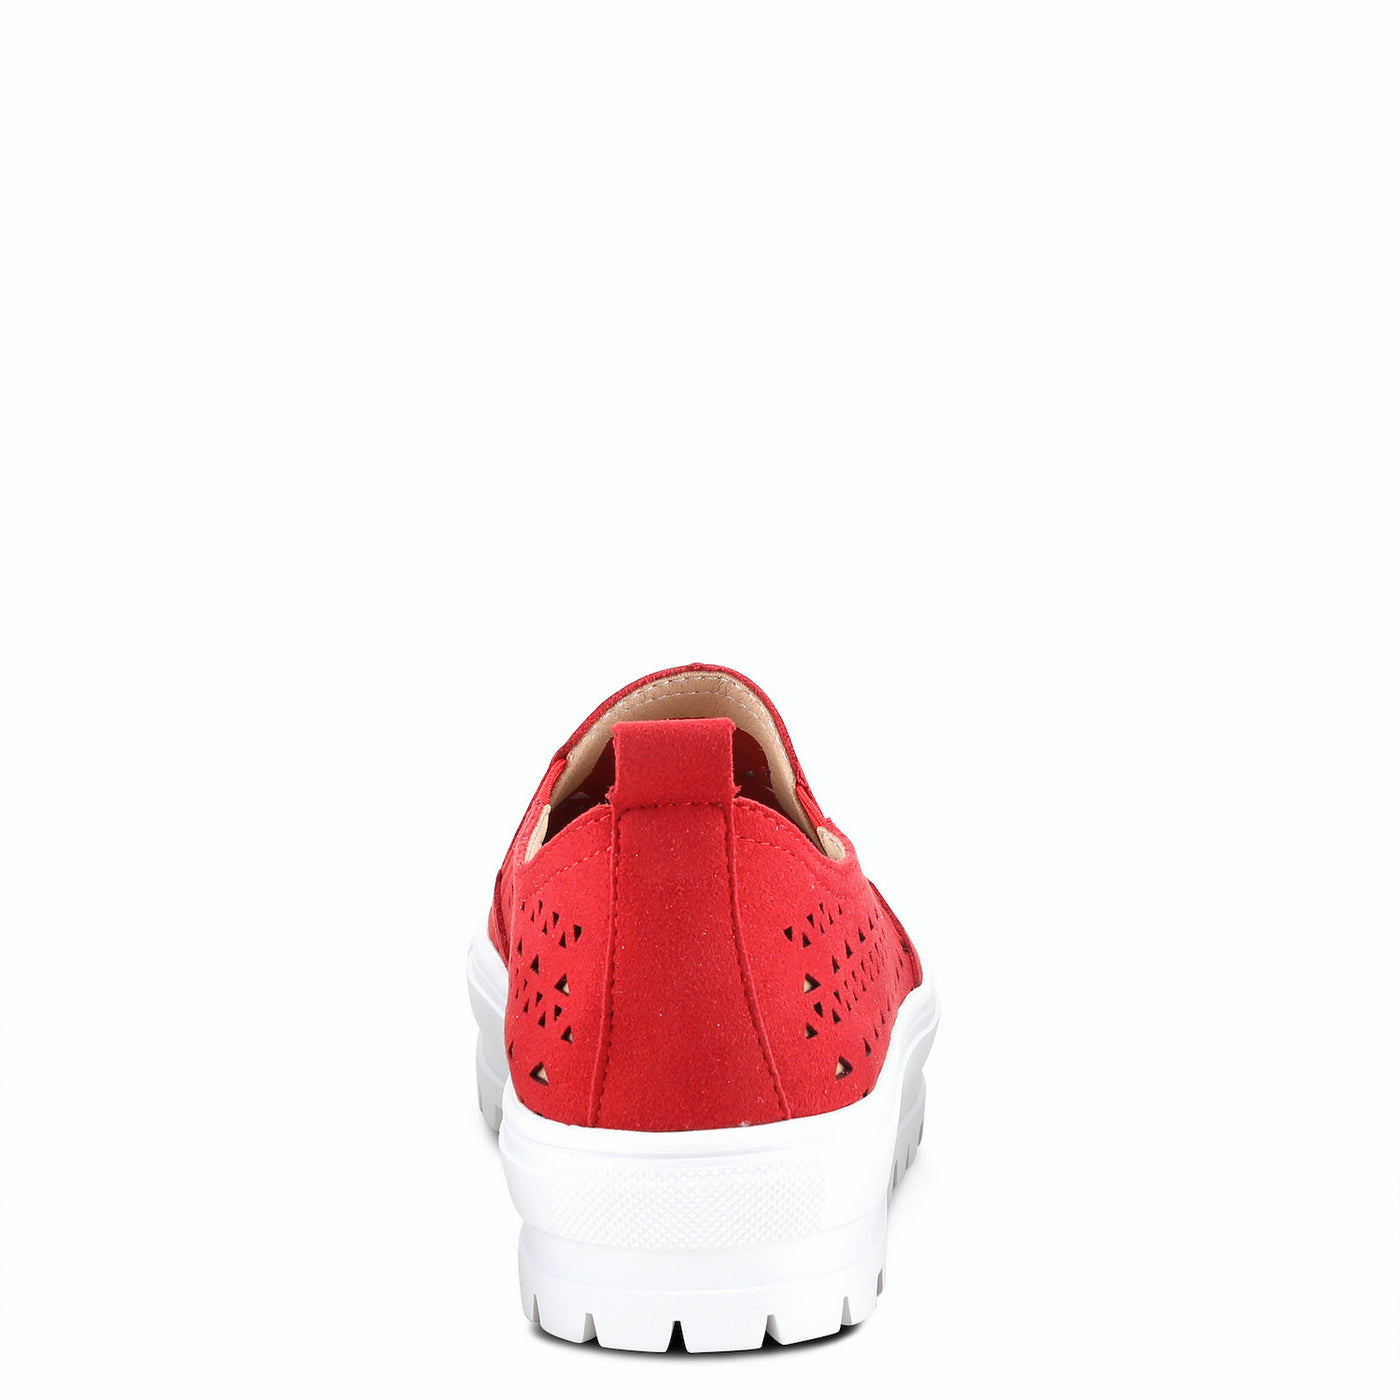 Patrizia ANGELITA Red Slip on Sneakers